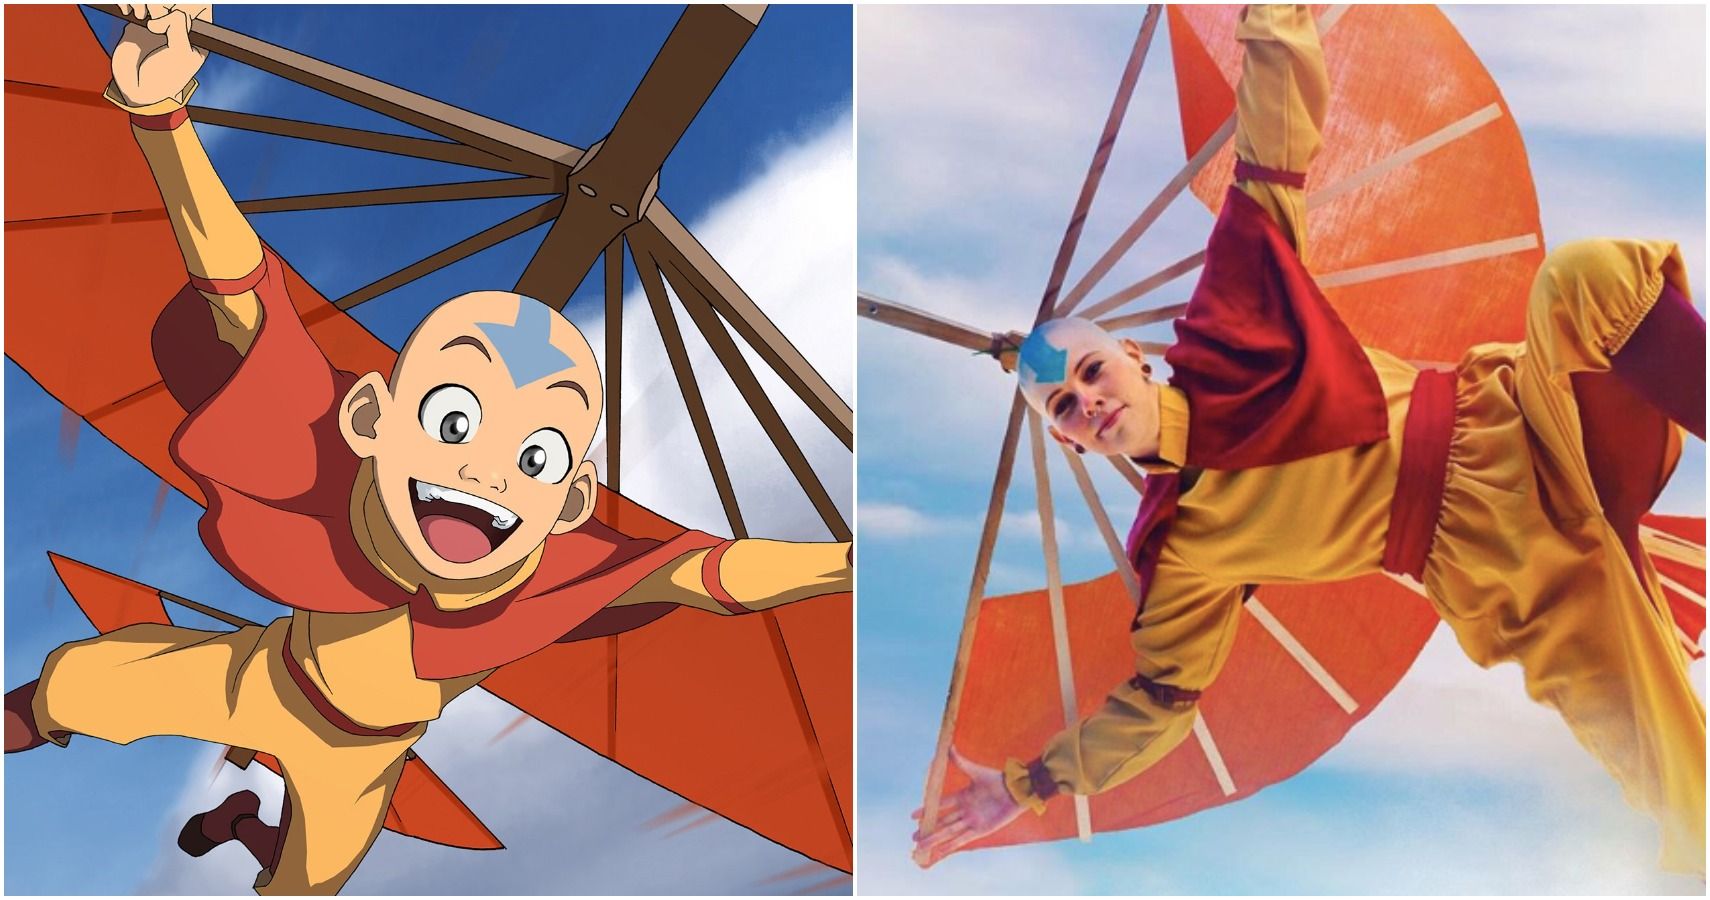 Adult Aang or Tenzin airbender avatar inspired cosplay costume.